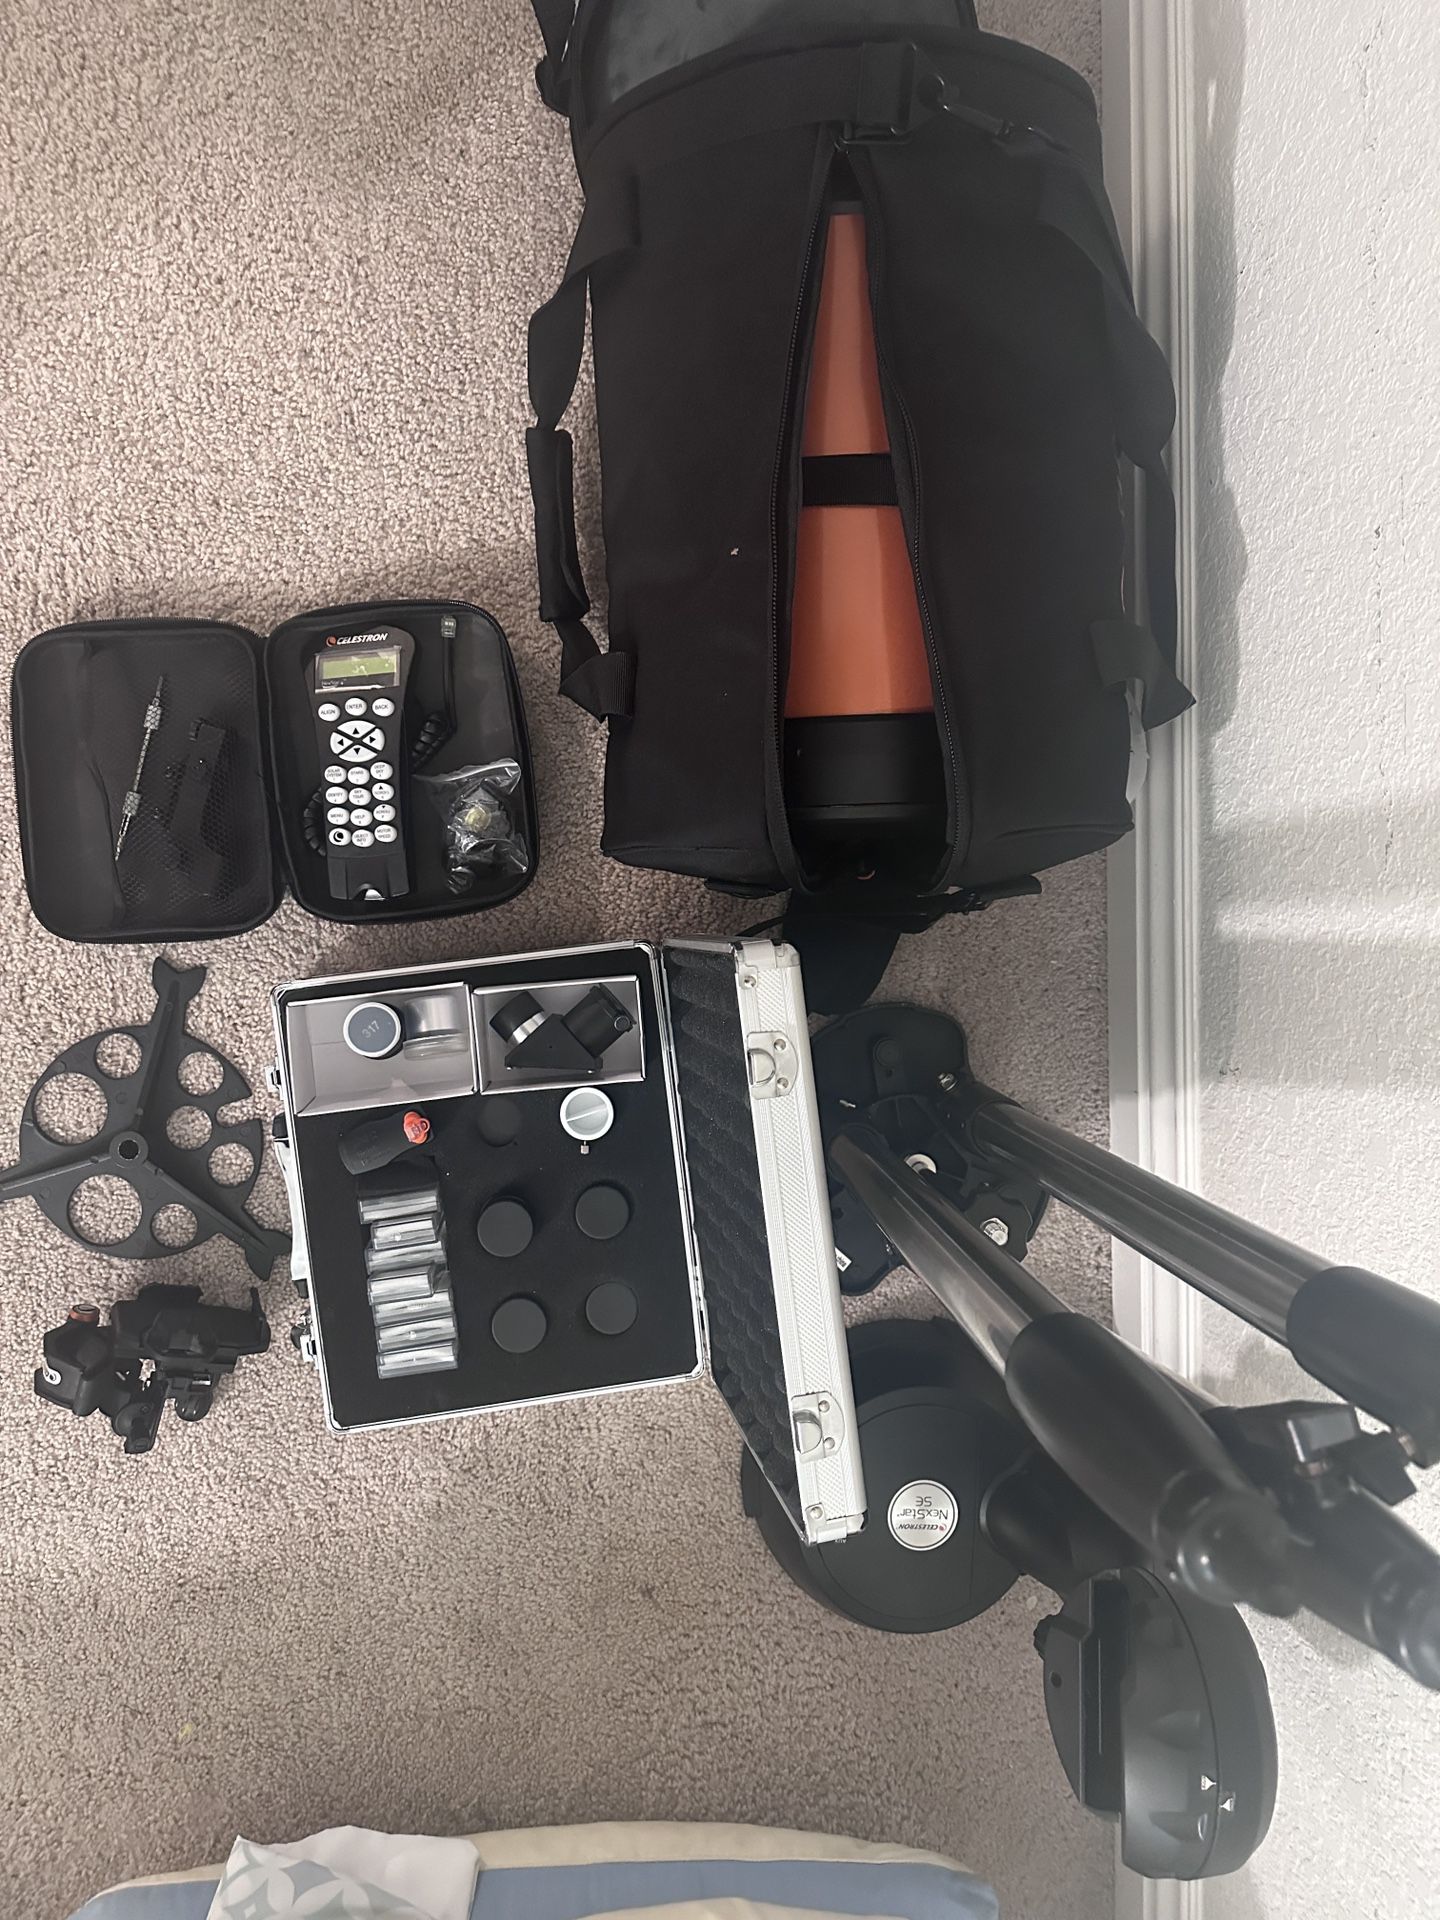 Celestron 8SE With bag, Lense Kit, WiFi Module And nexyz Adapter